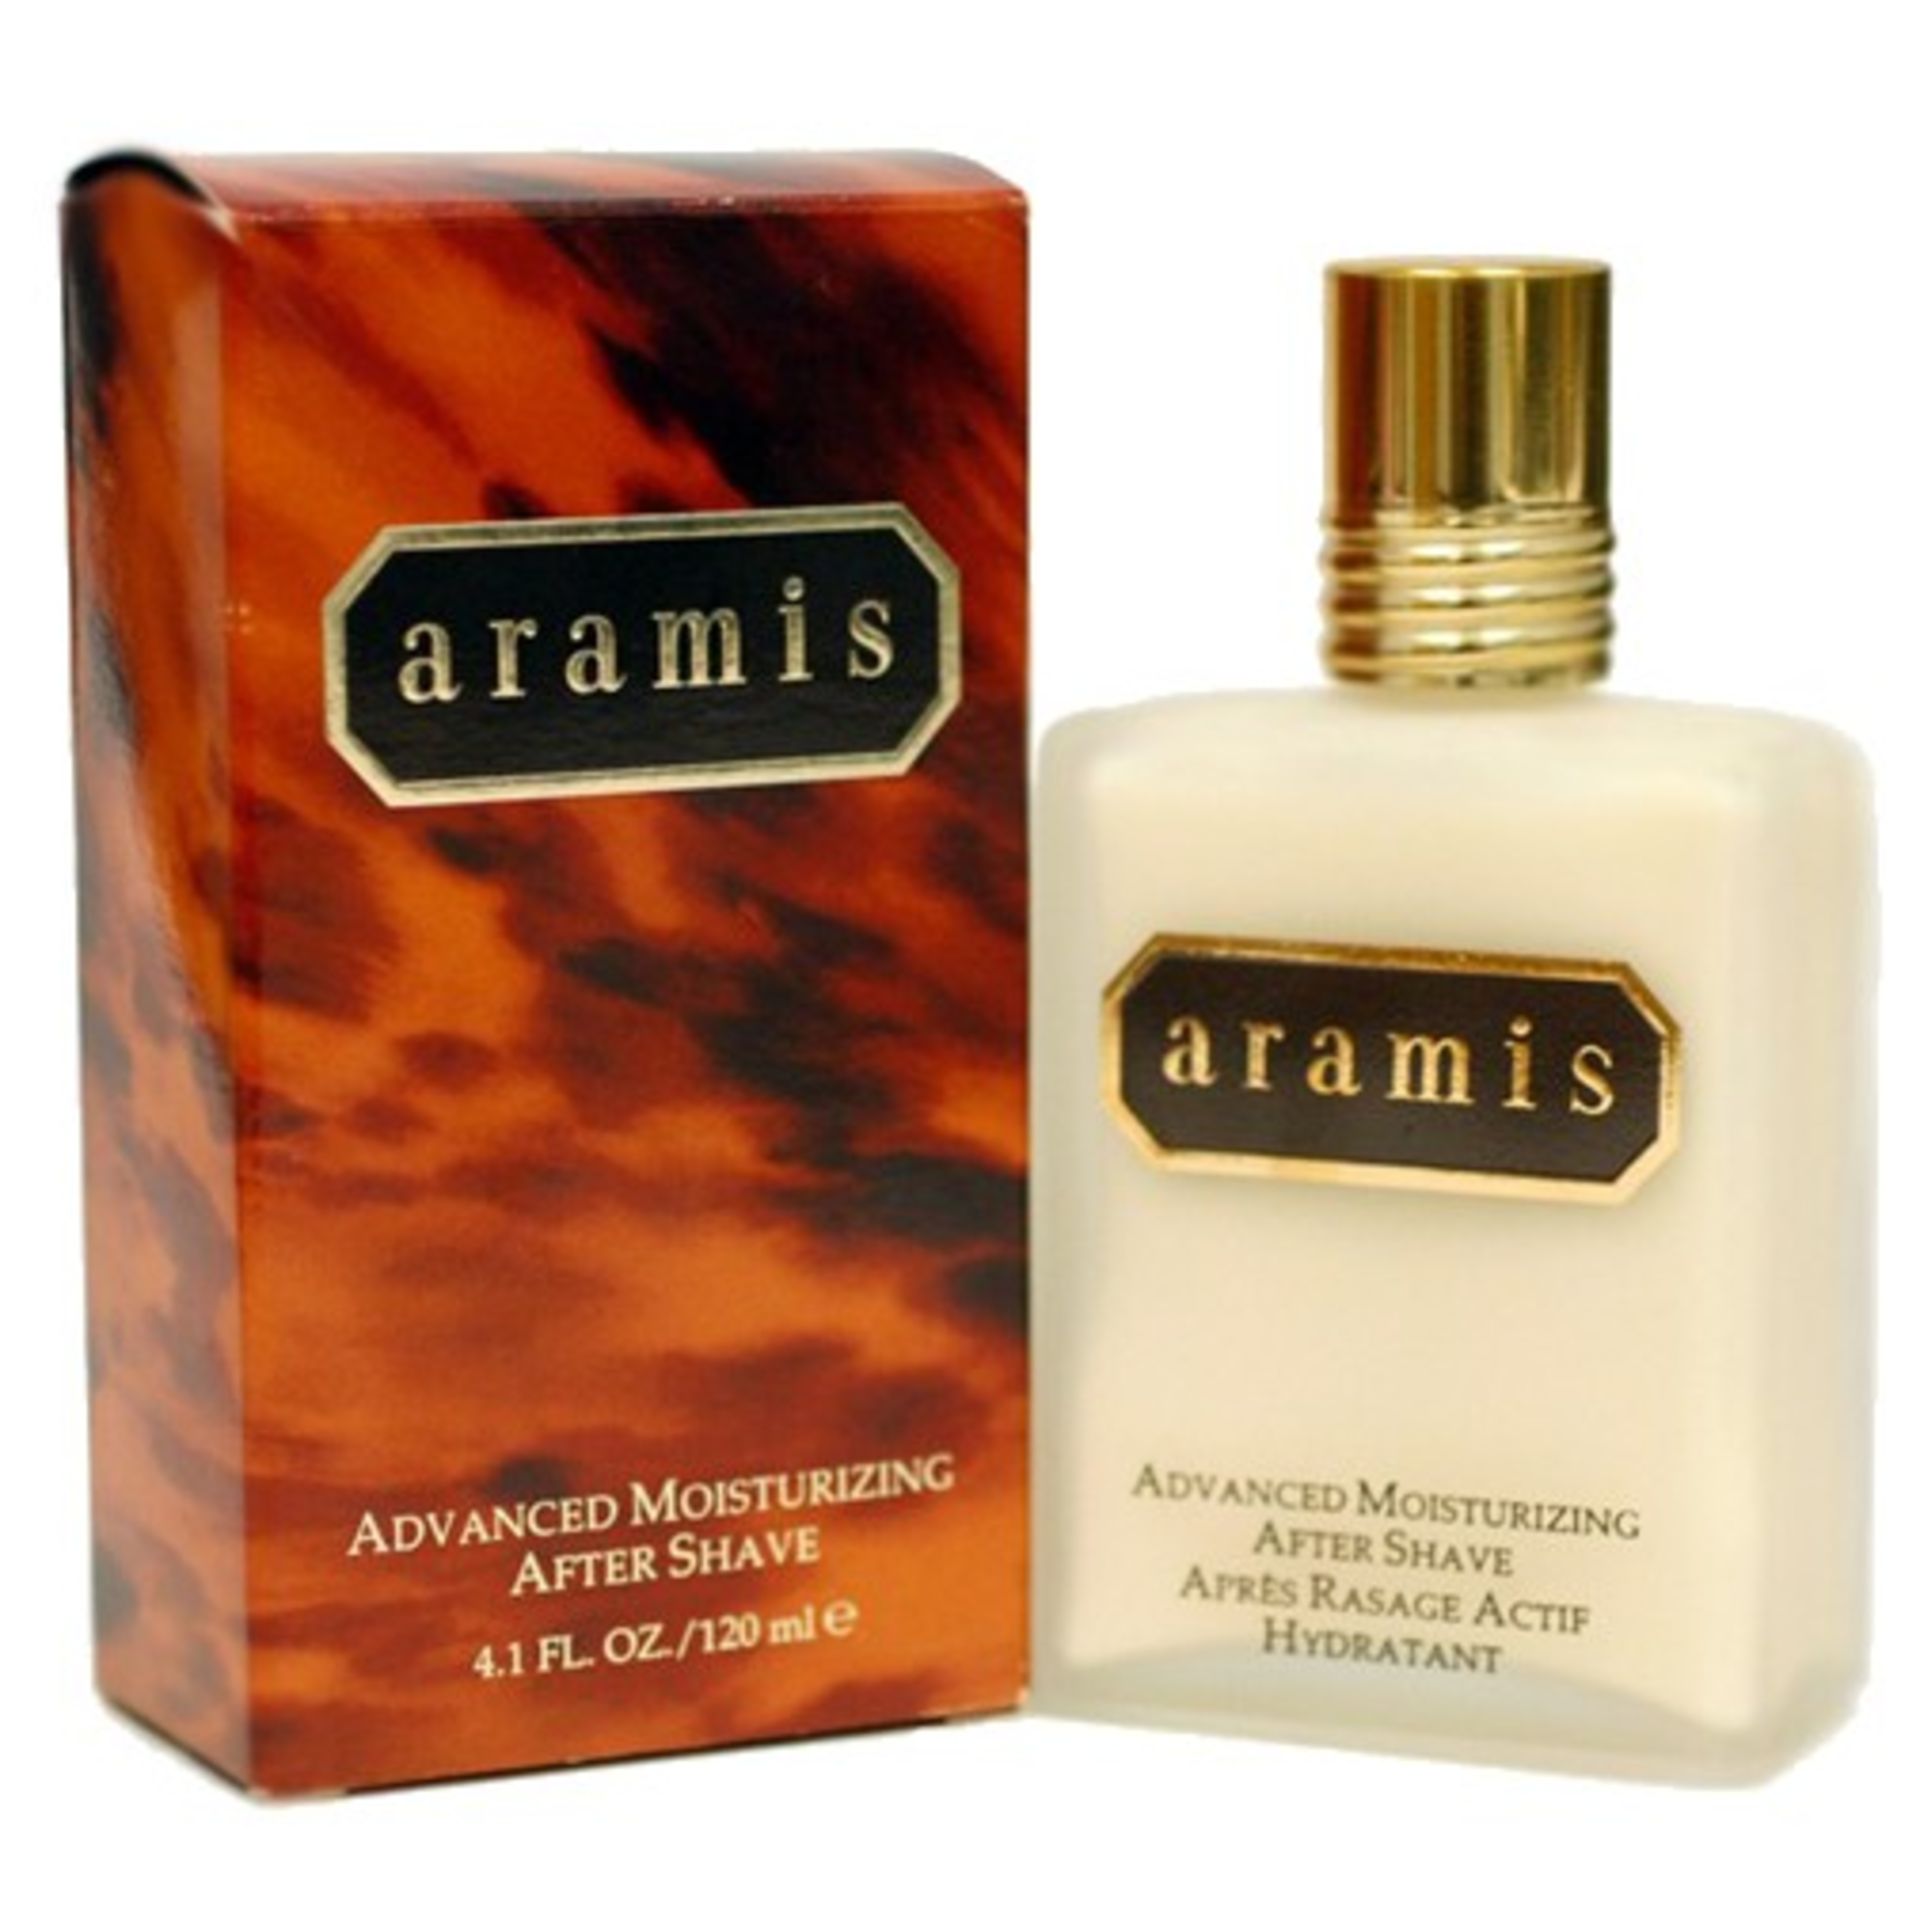 V Brand New Aramis Advanced Moisturising After Shave Balm eBay Price £38.20